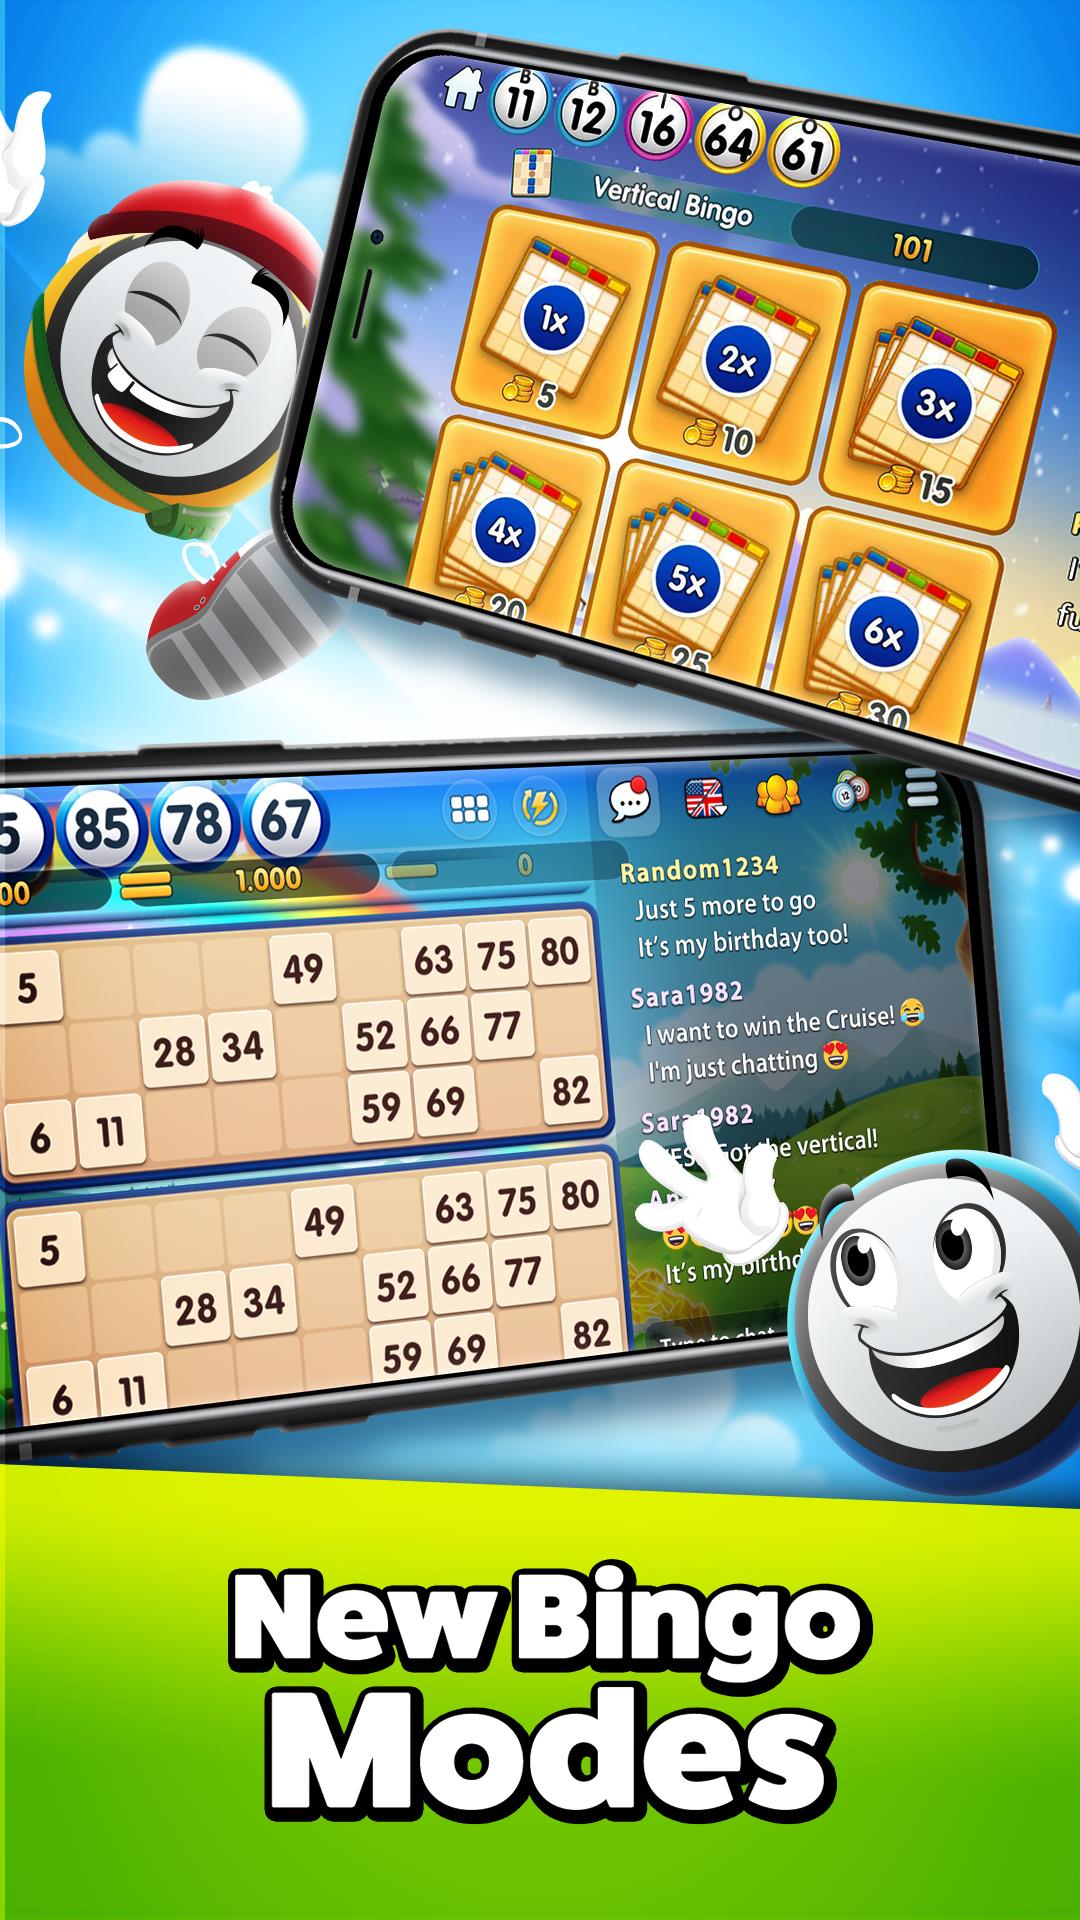 GamePoint Bingo - Bingo games Screenshot 3